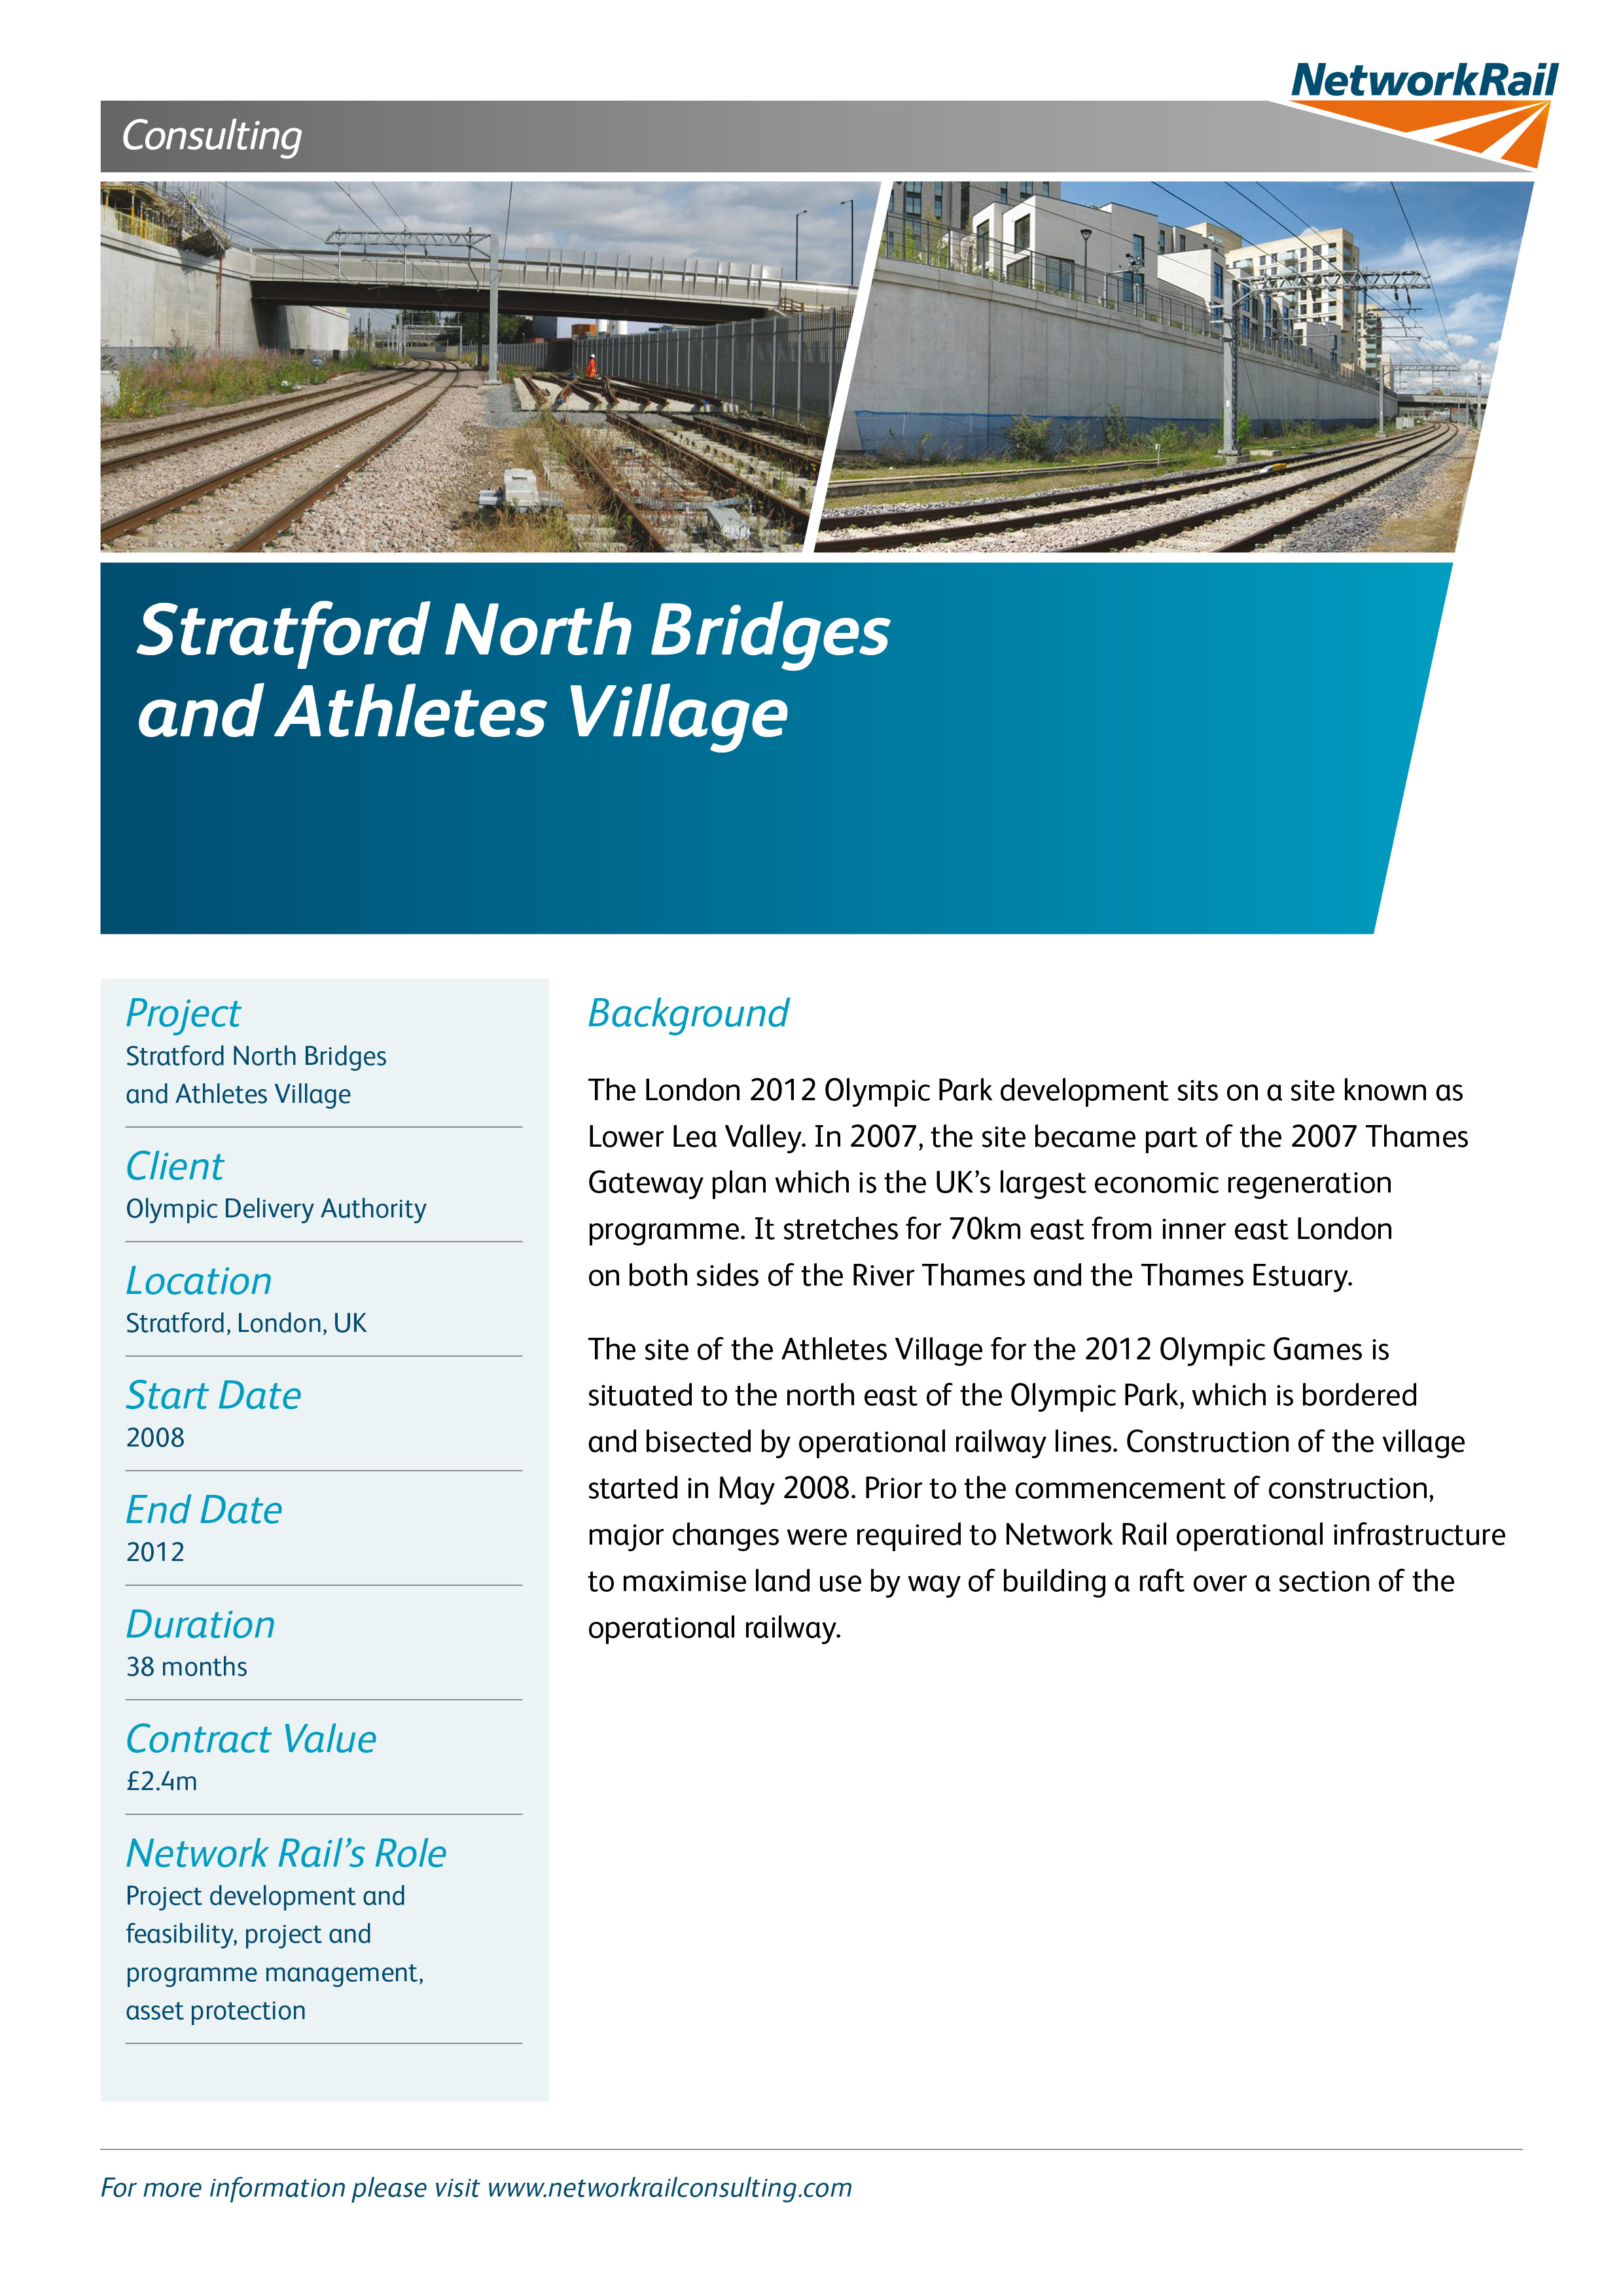 Stratford North Bridges and Athletes Village